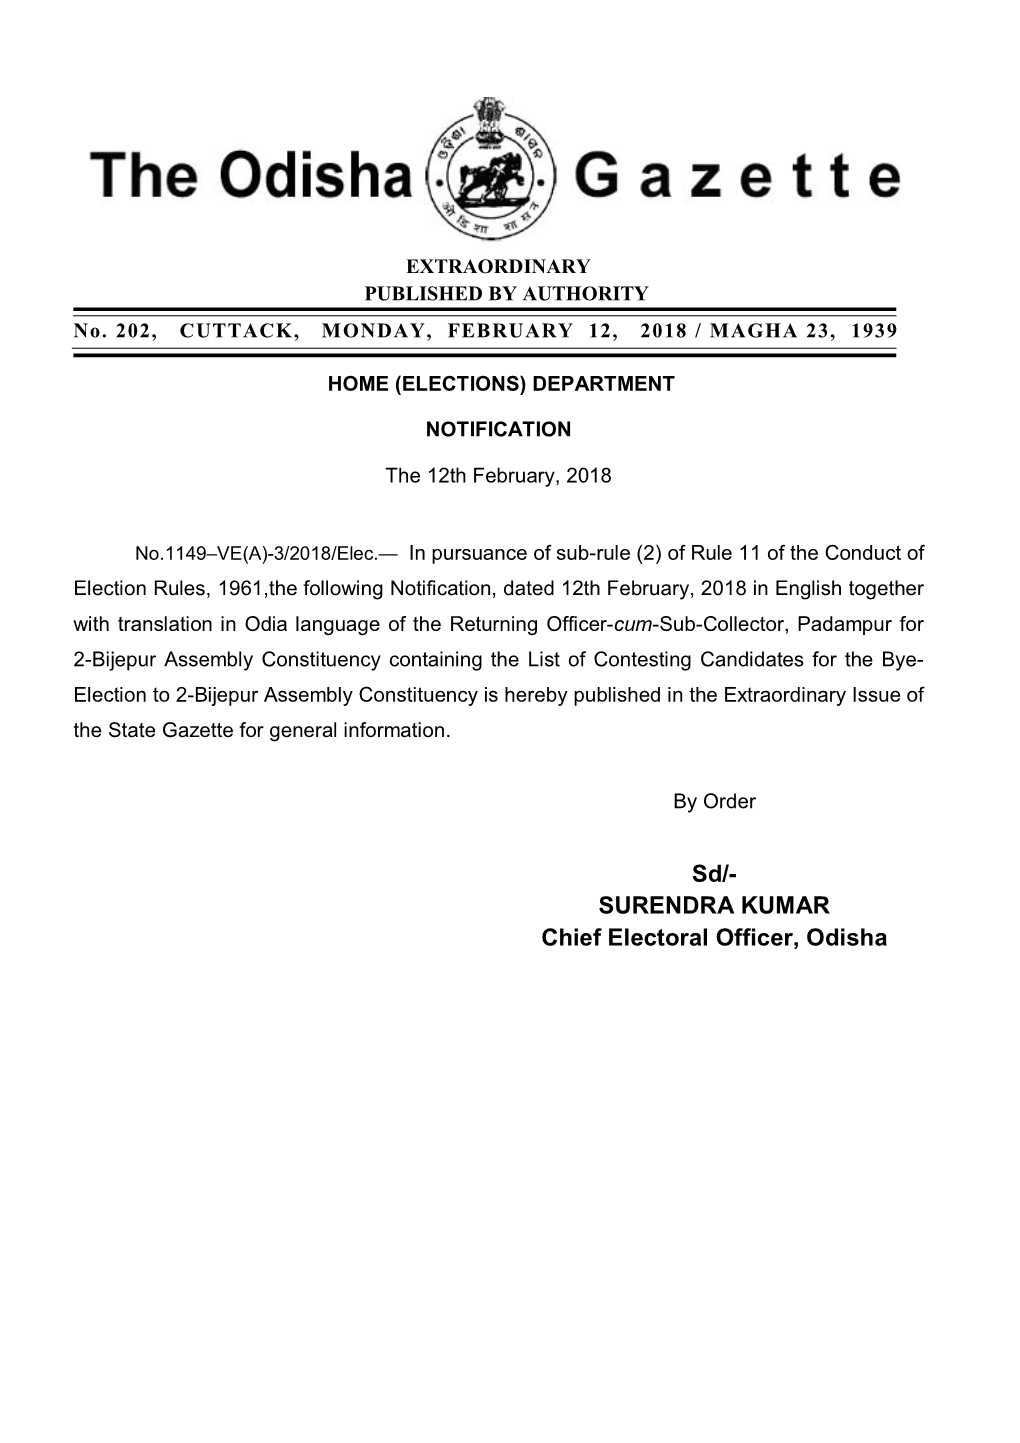 Sd/- SURENDRA KUMAR Chief Electoral Officer, Odisha